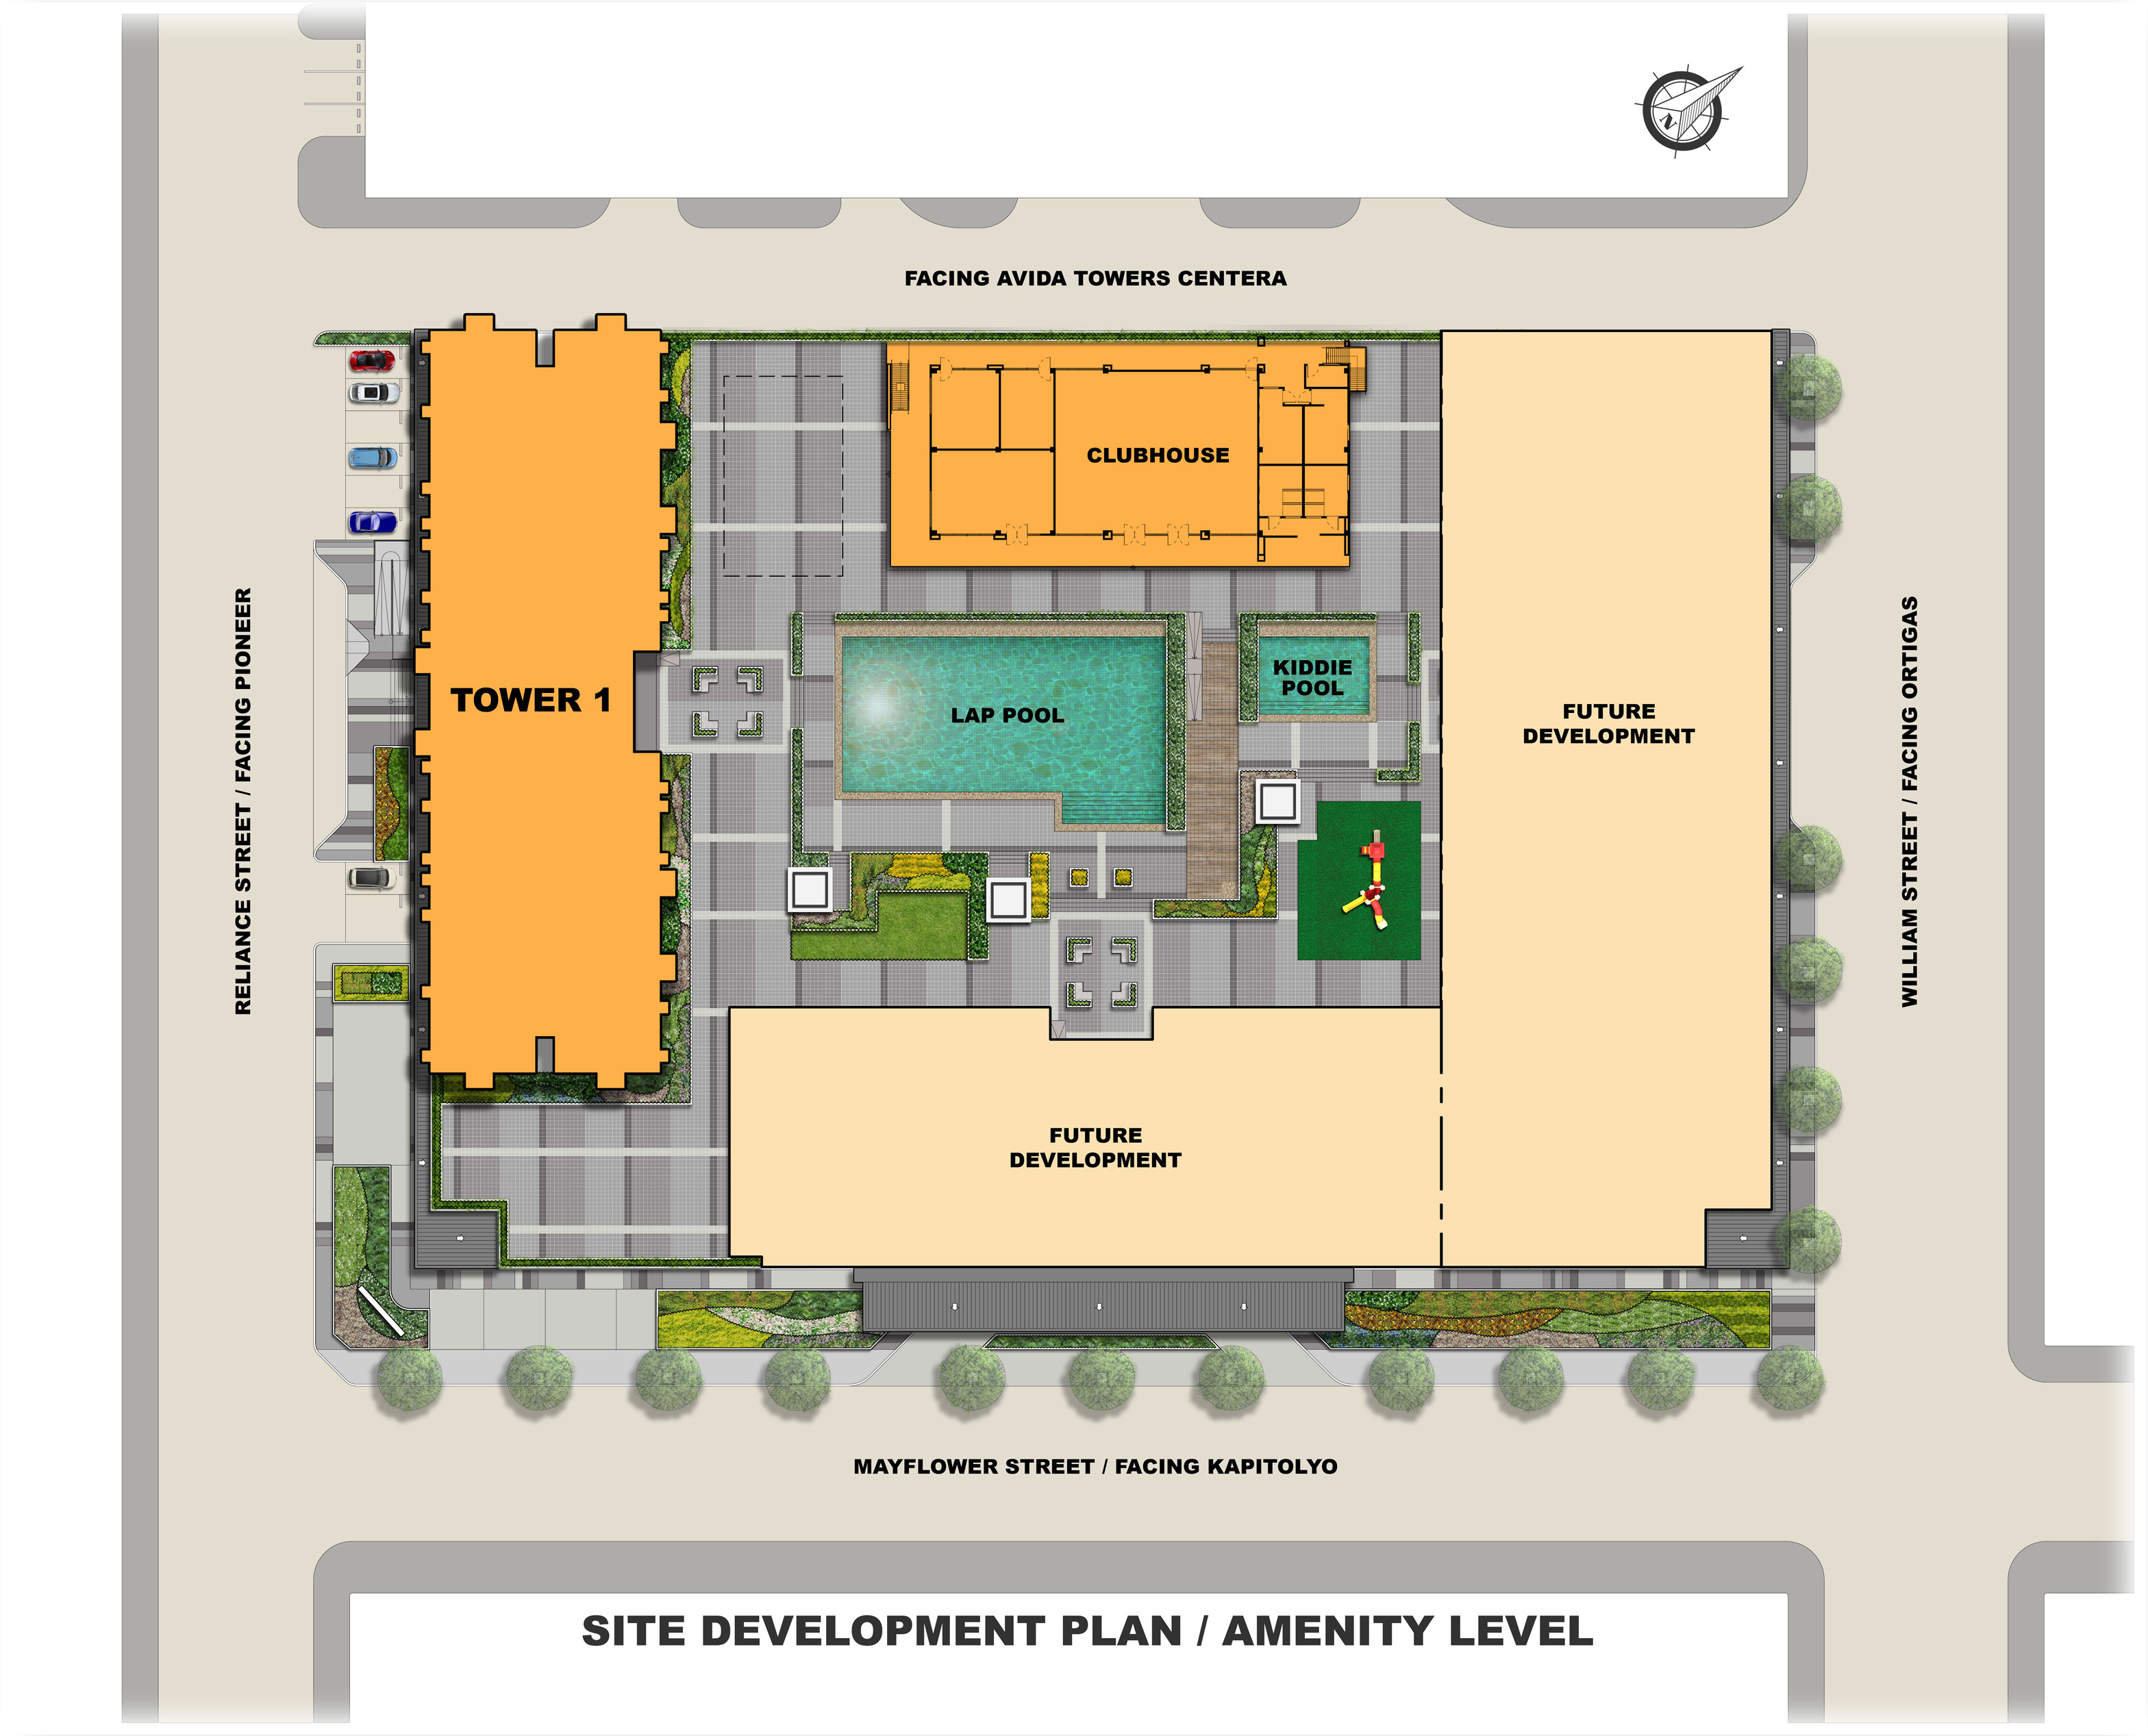 avida towers verge site development plan amenity level 101 20180907071952